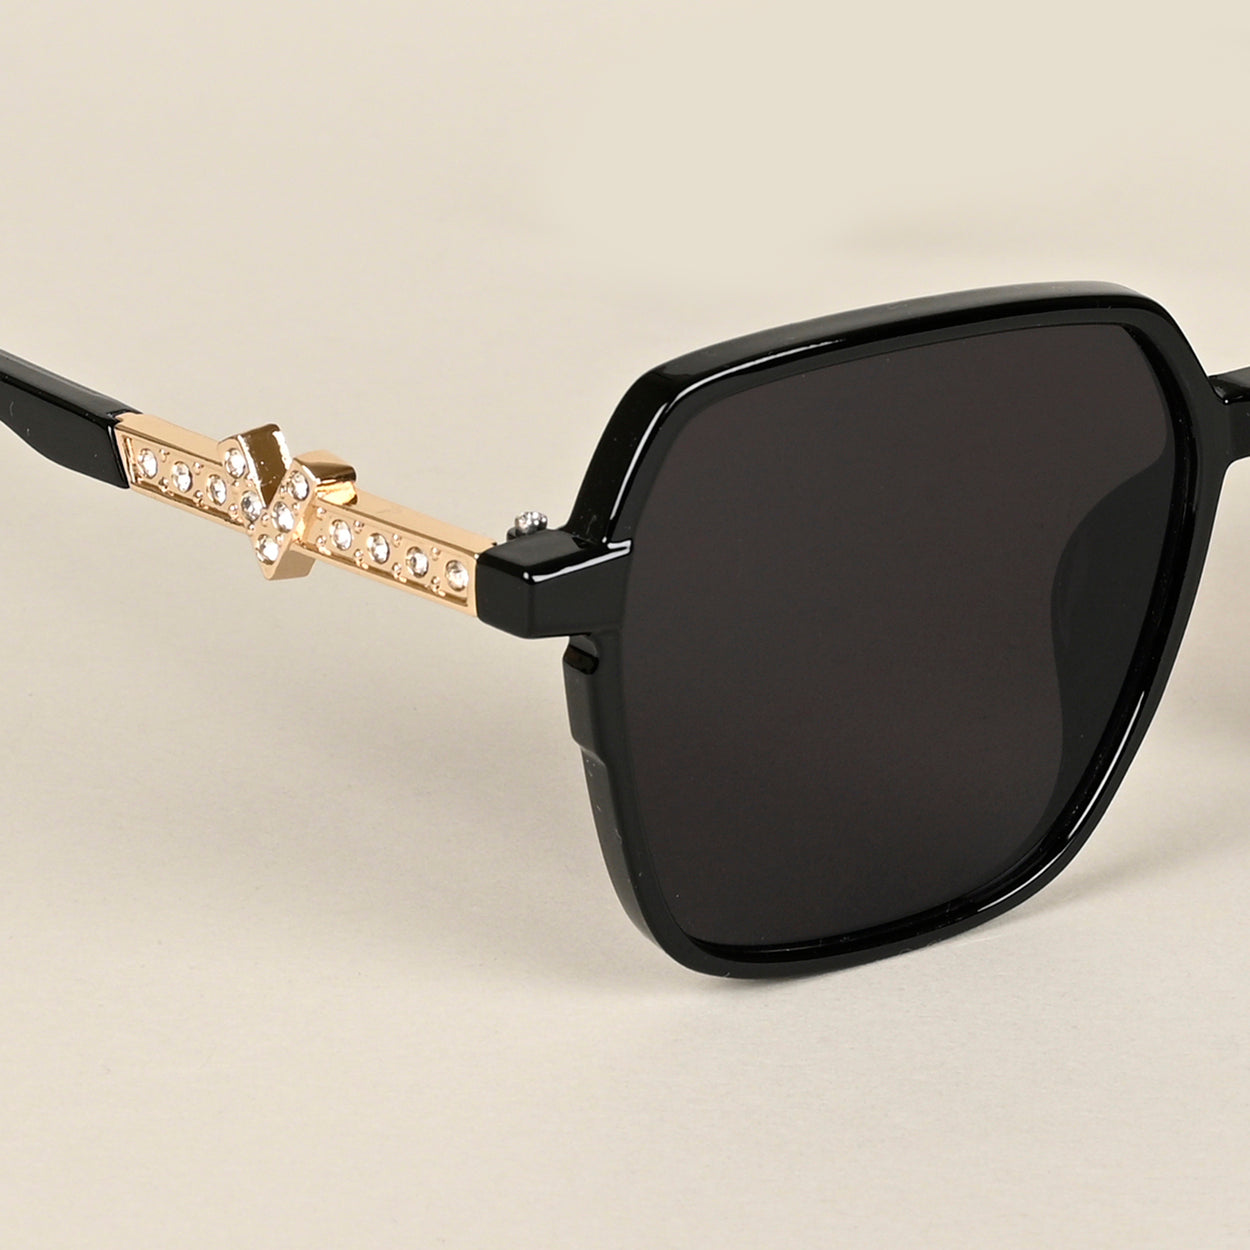 Voyage Black Square Sunglasses for Women (G15020MG4231)